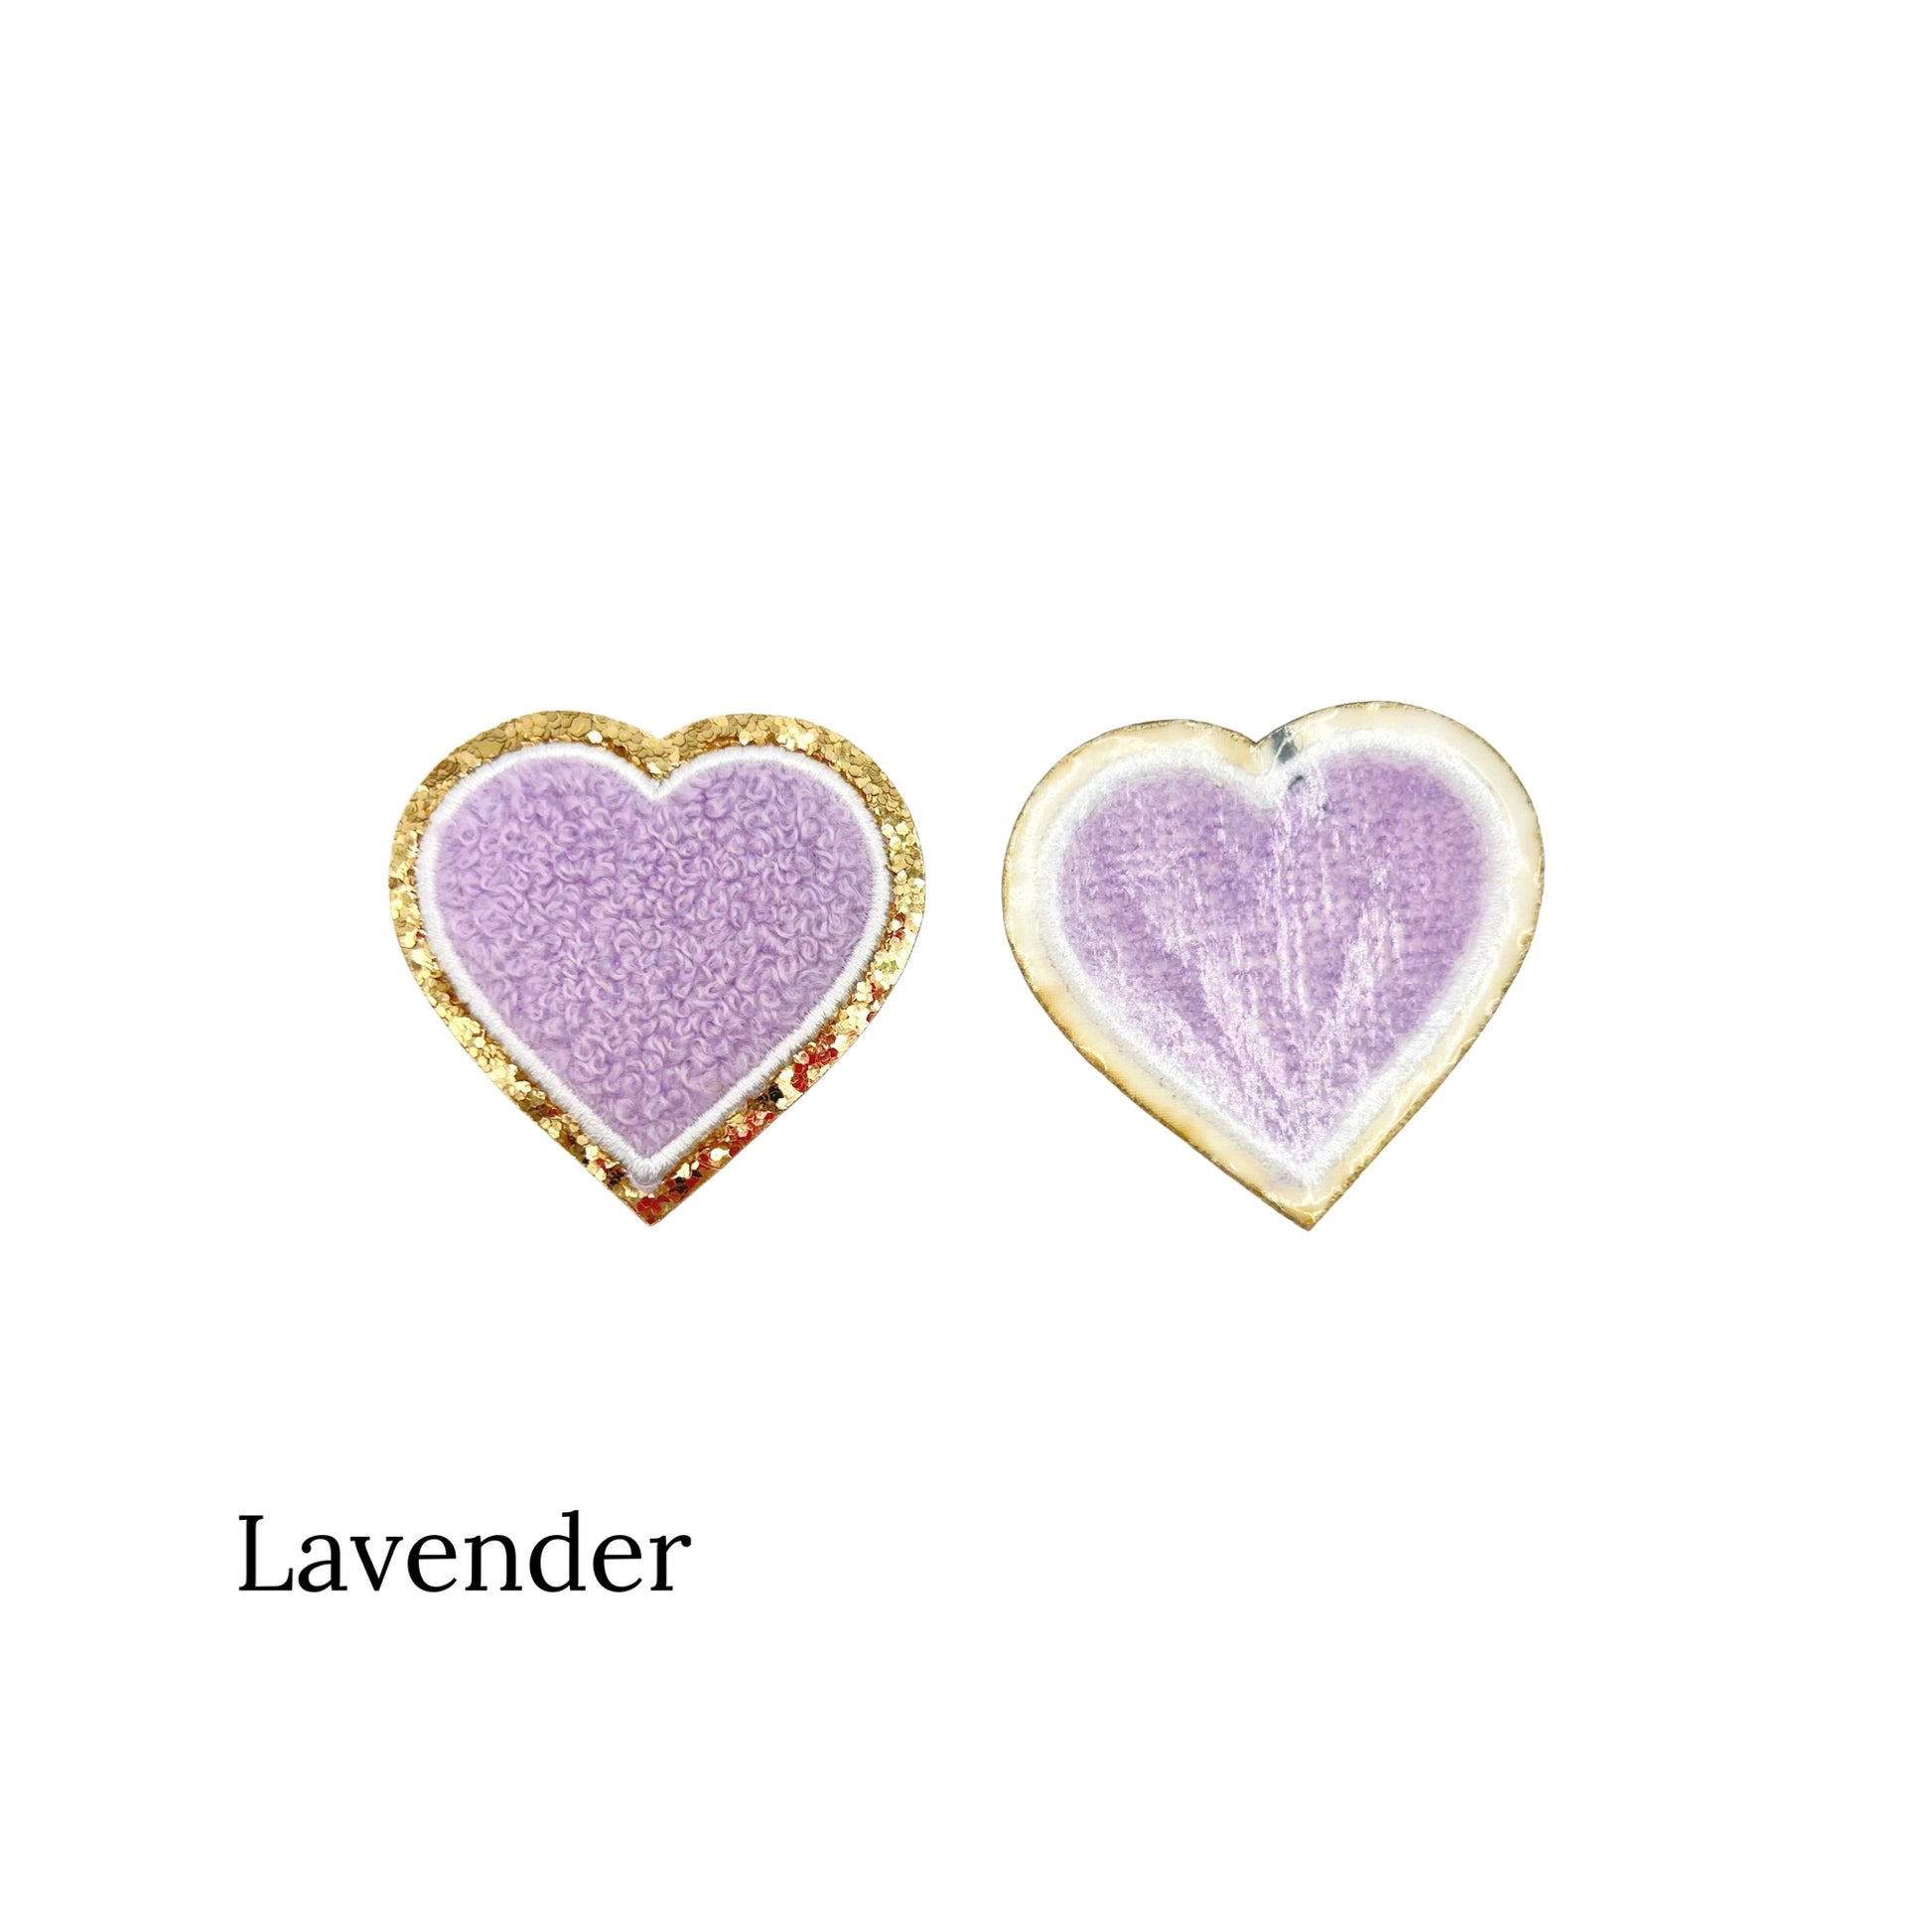 Lavender Glitter Iron-On Vinyl